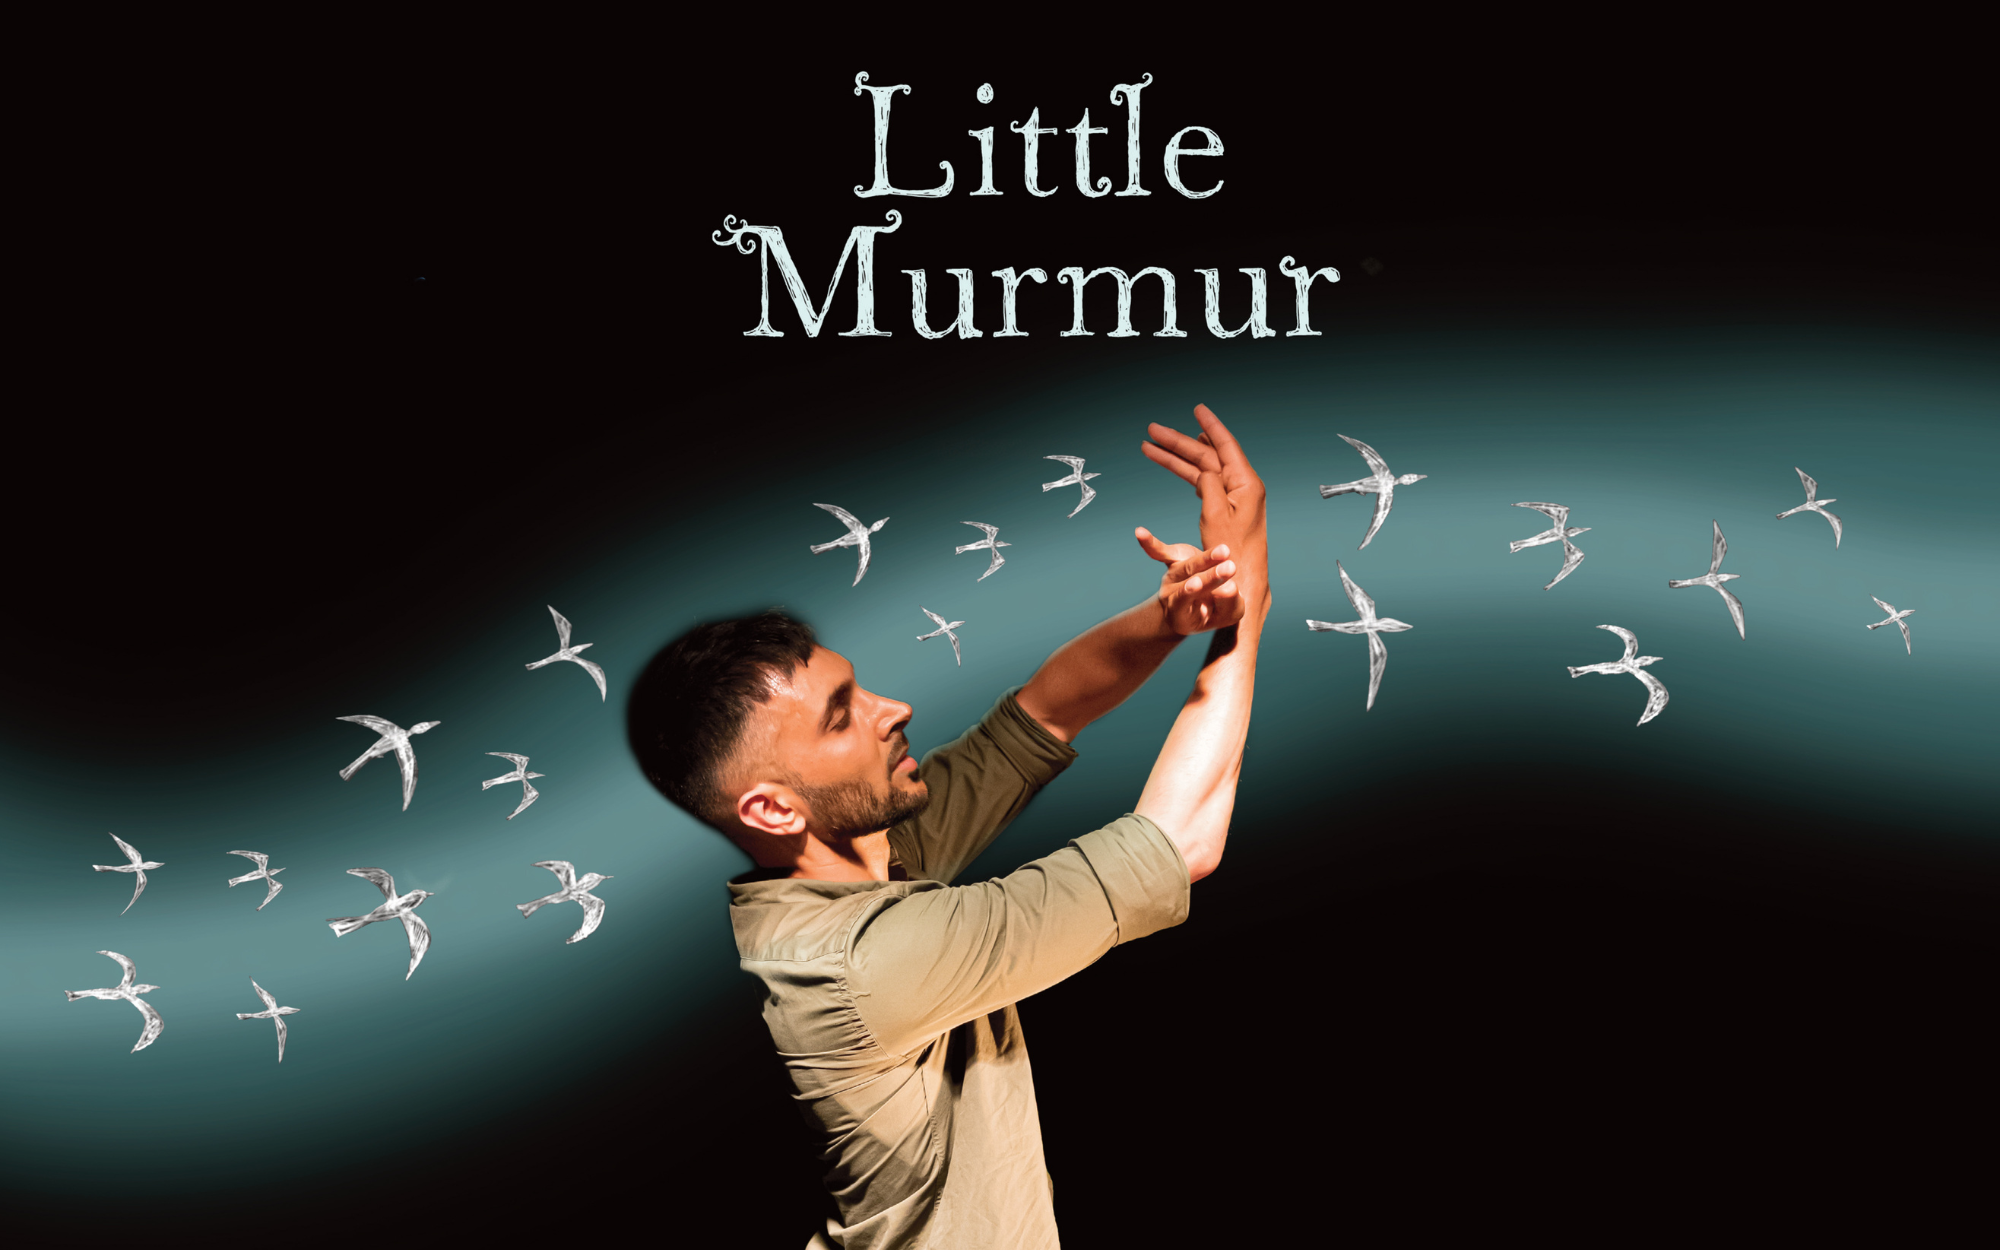 Little Murmur